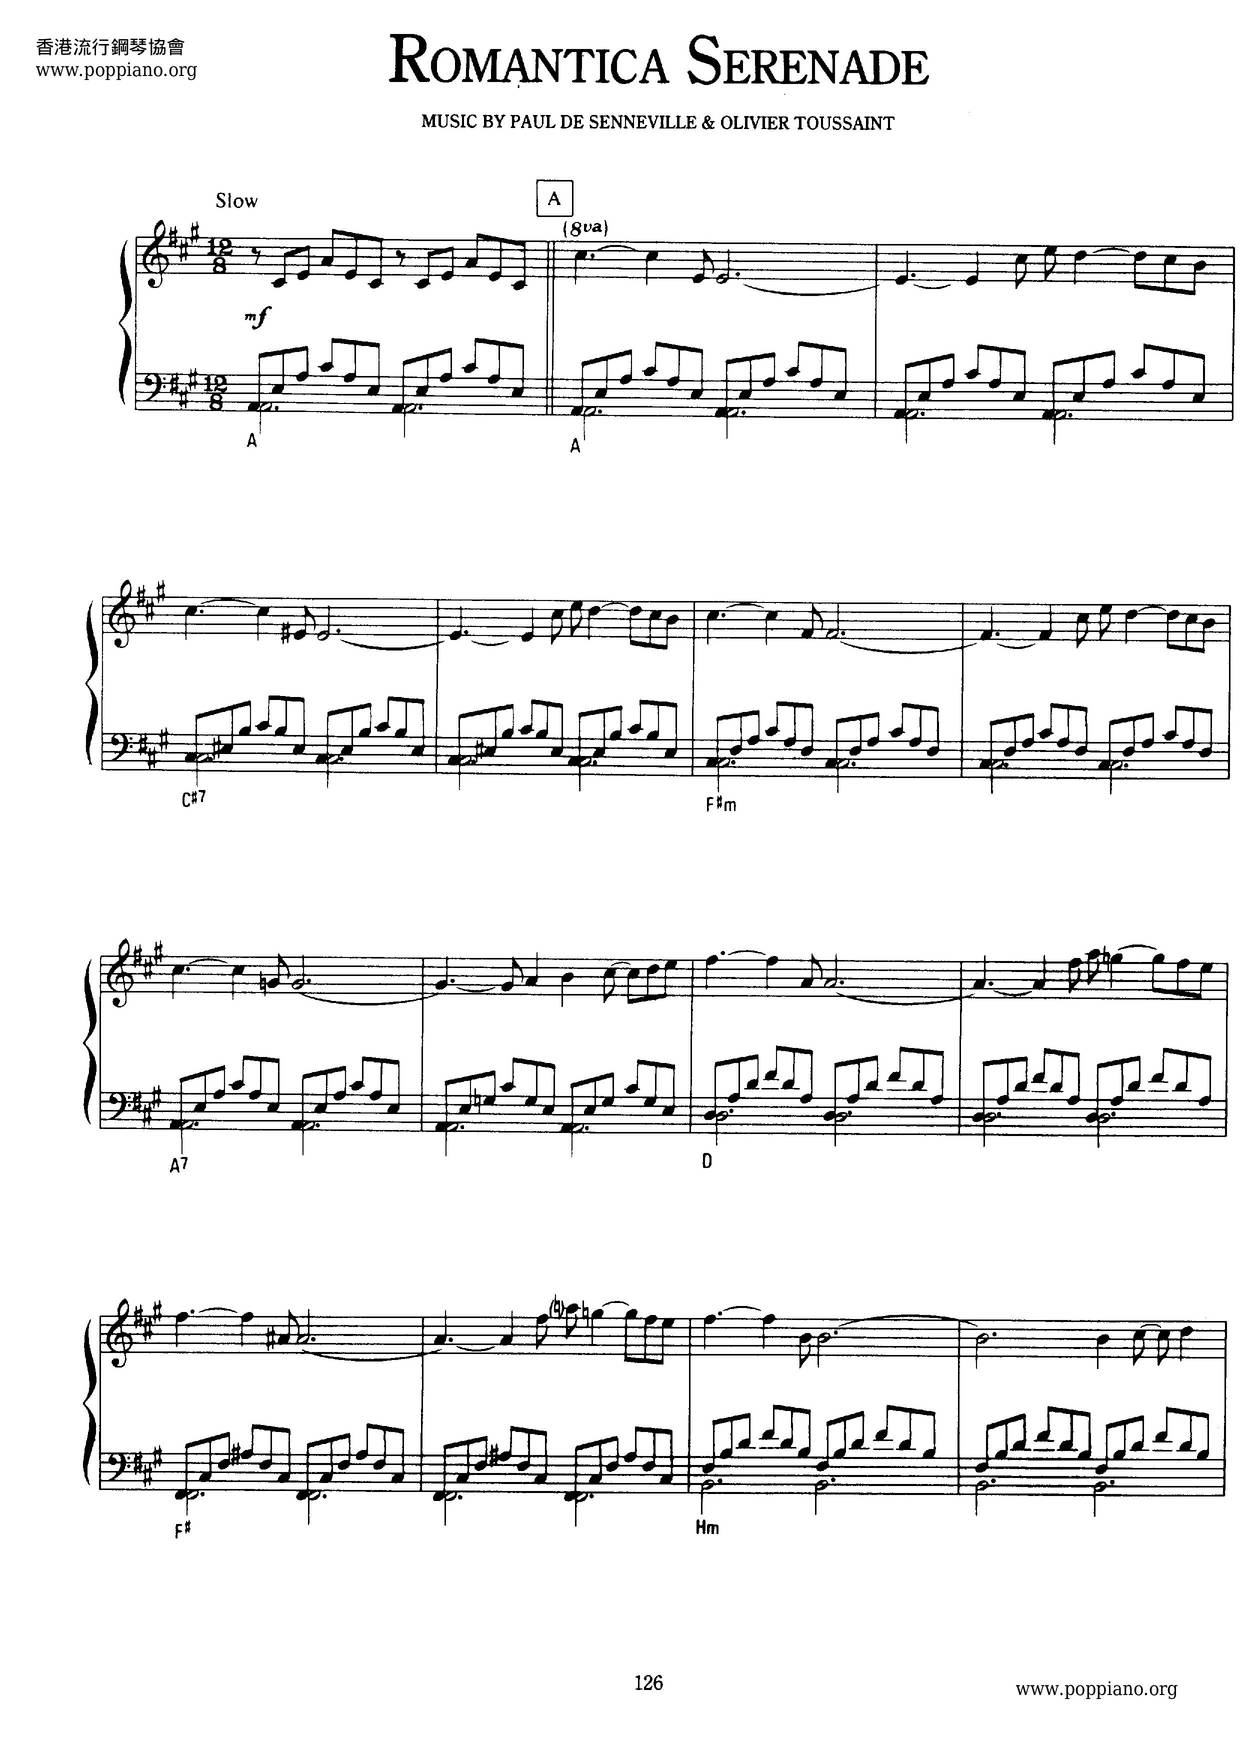 Romantica Serenade Score